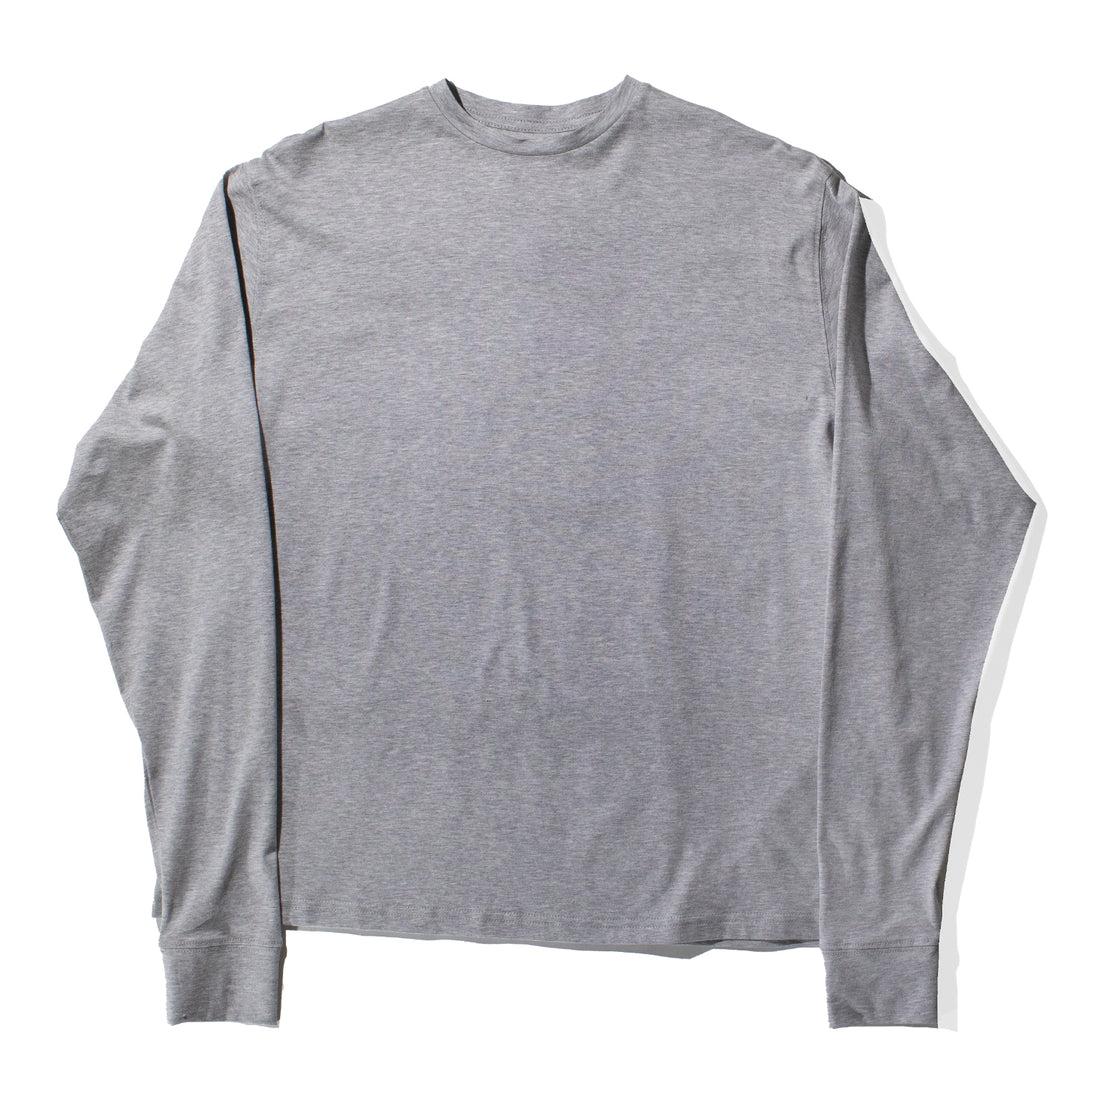 Studio Nicholson Simmons Long Sleeve T-Shirt in Grey Marl